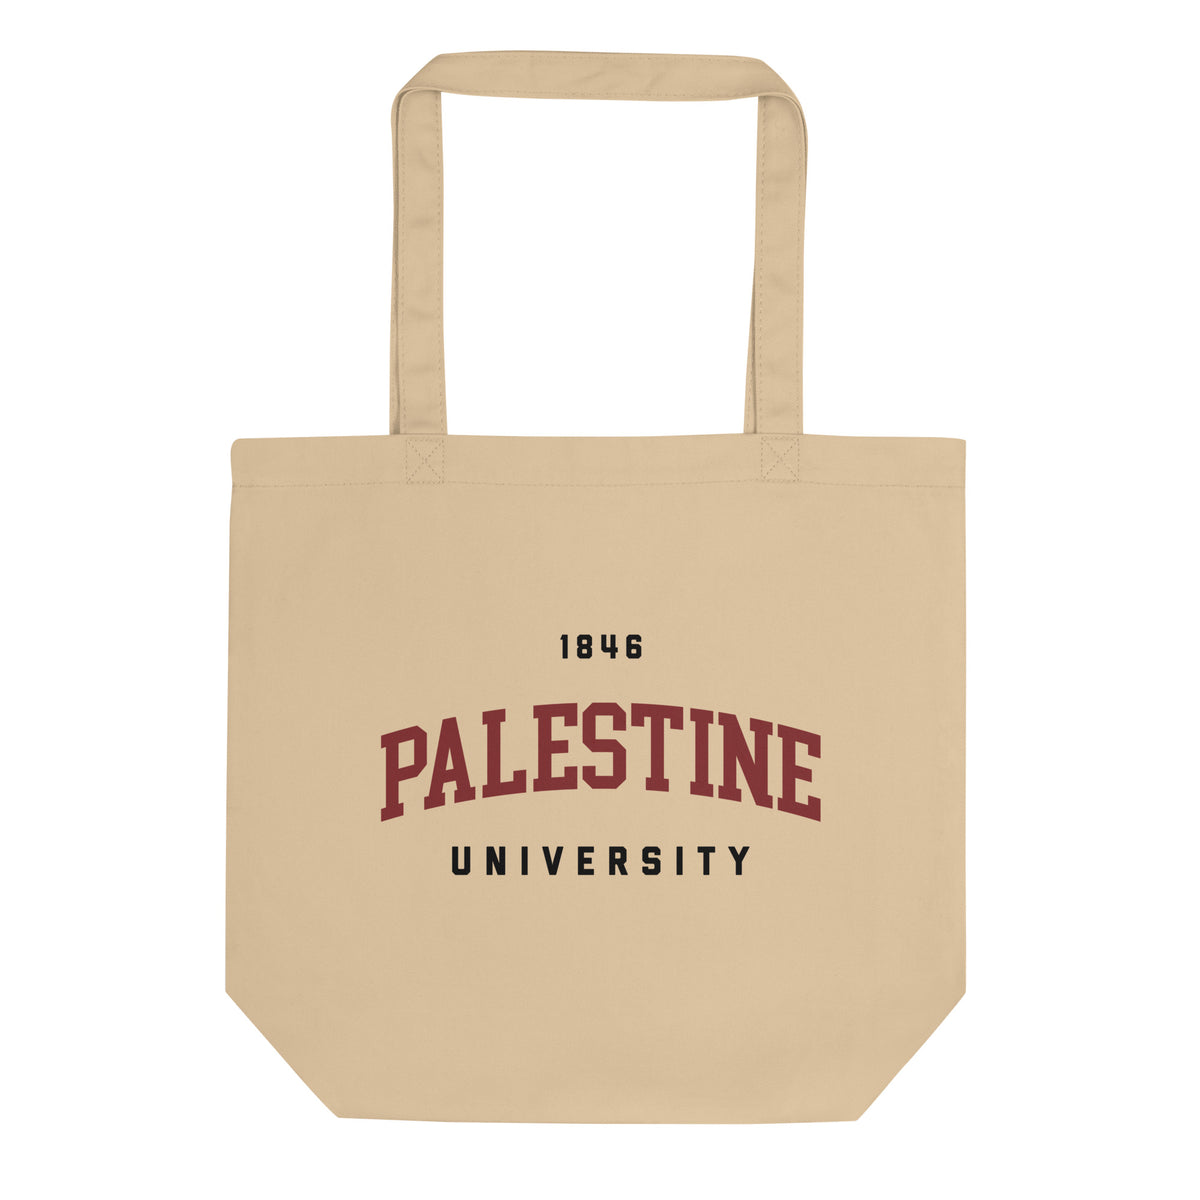 Palestine University 1846 - Tote